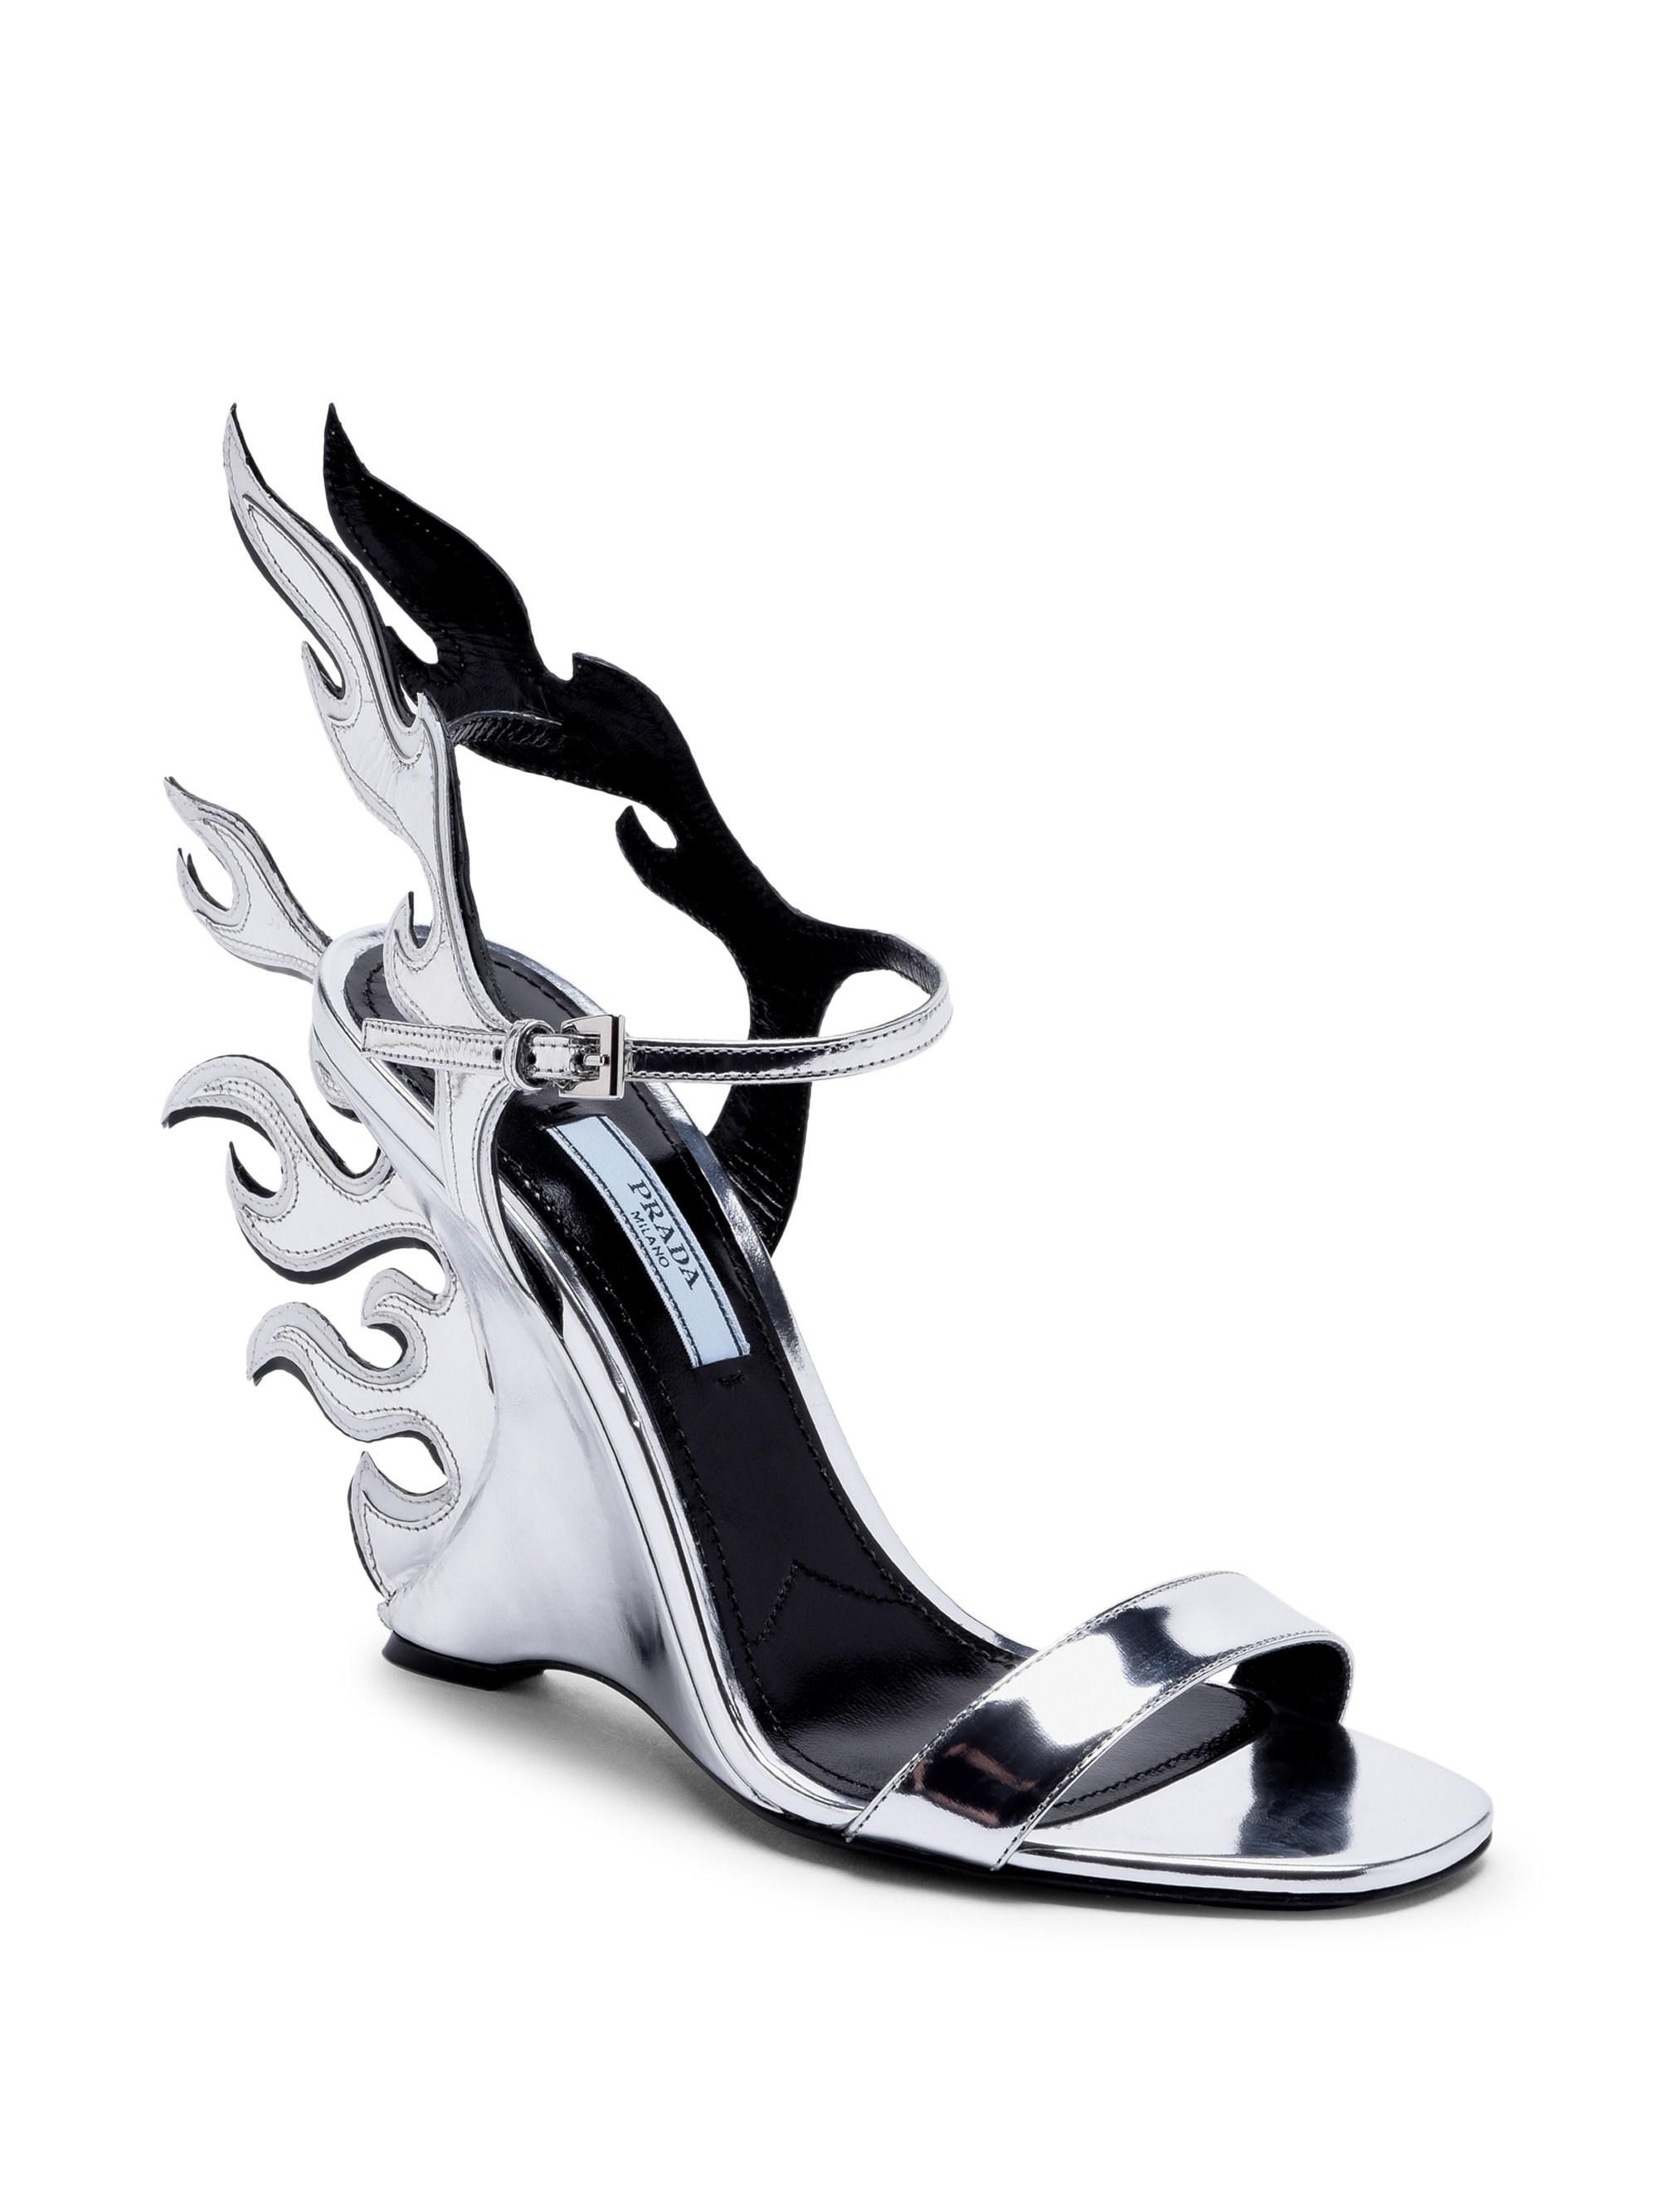 prada flame heels silver, OFF 77%,www 